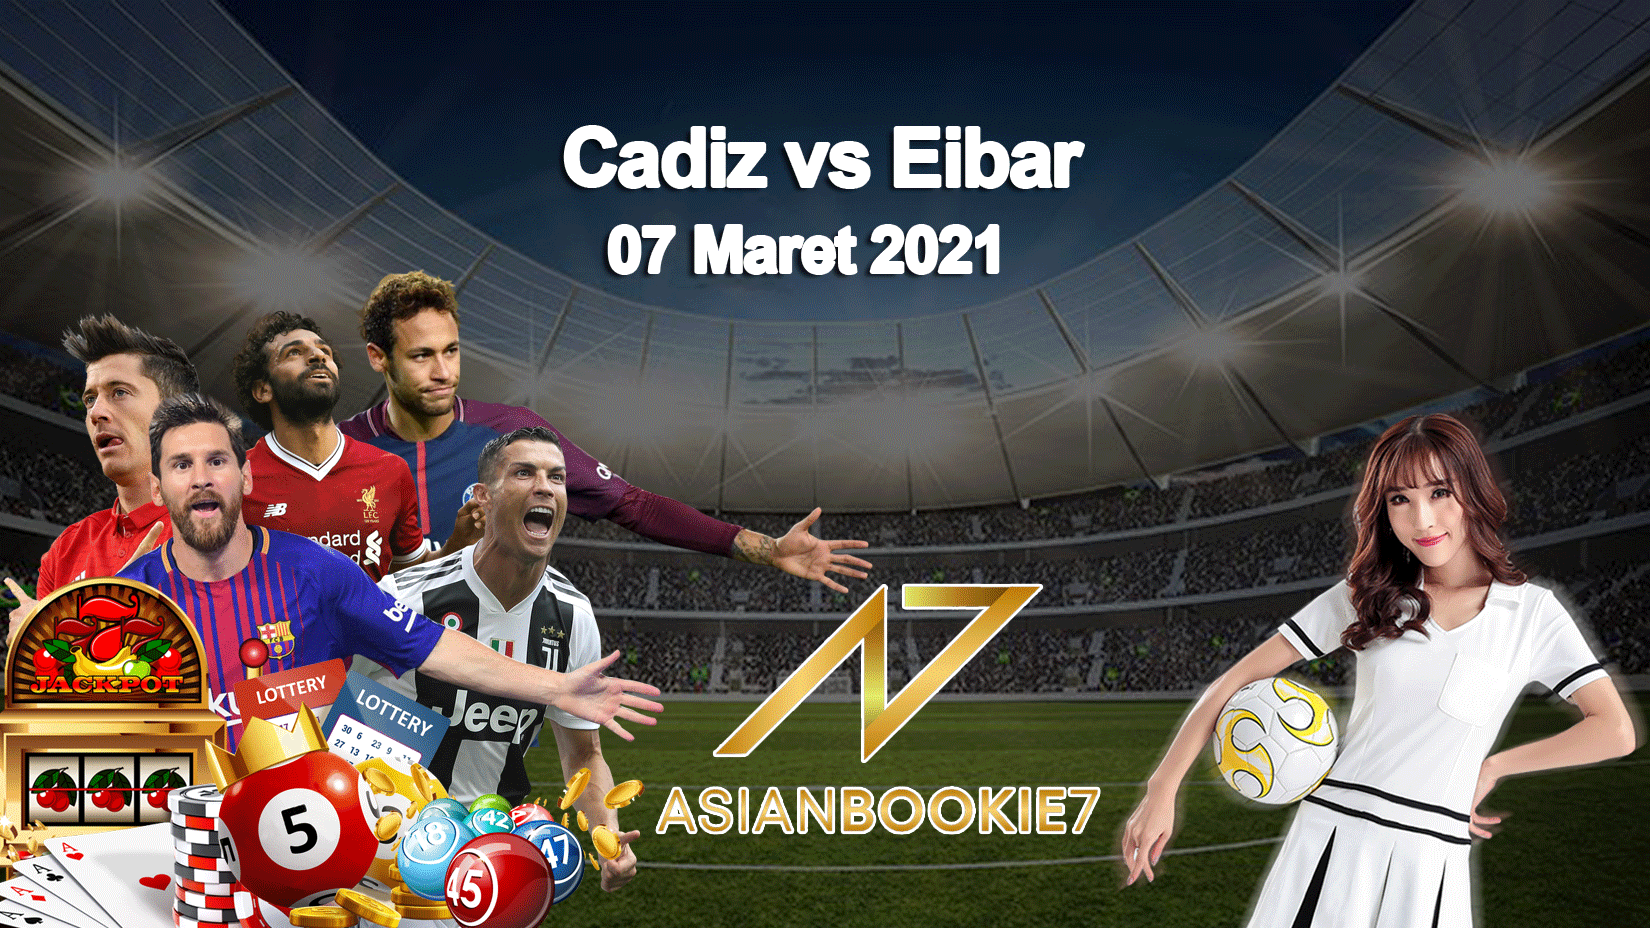 Prediksi-Cadiz-vs-Eibar-07-Maret-2021